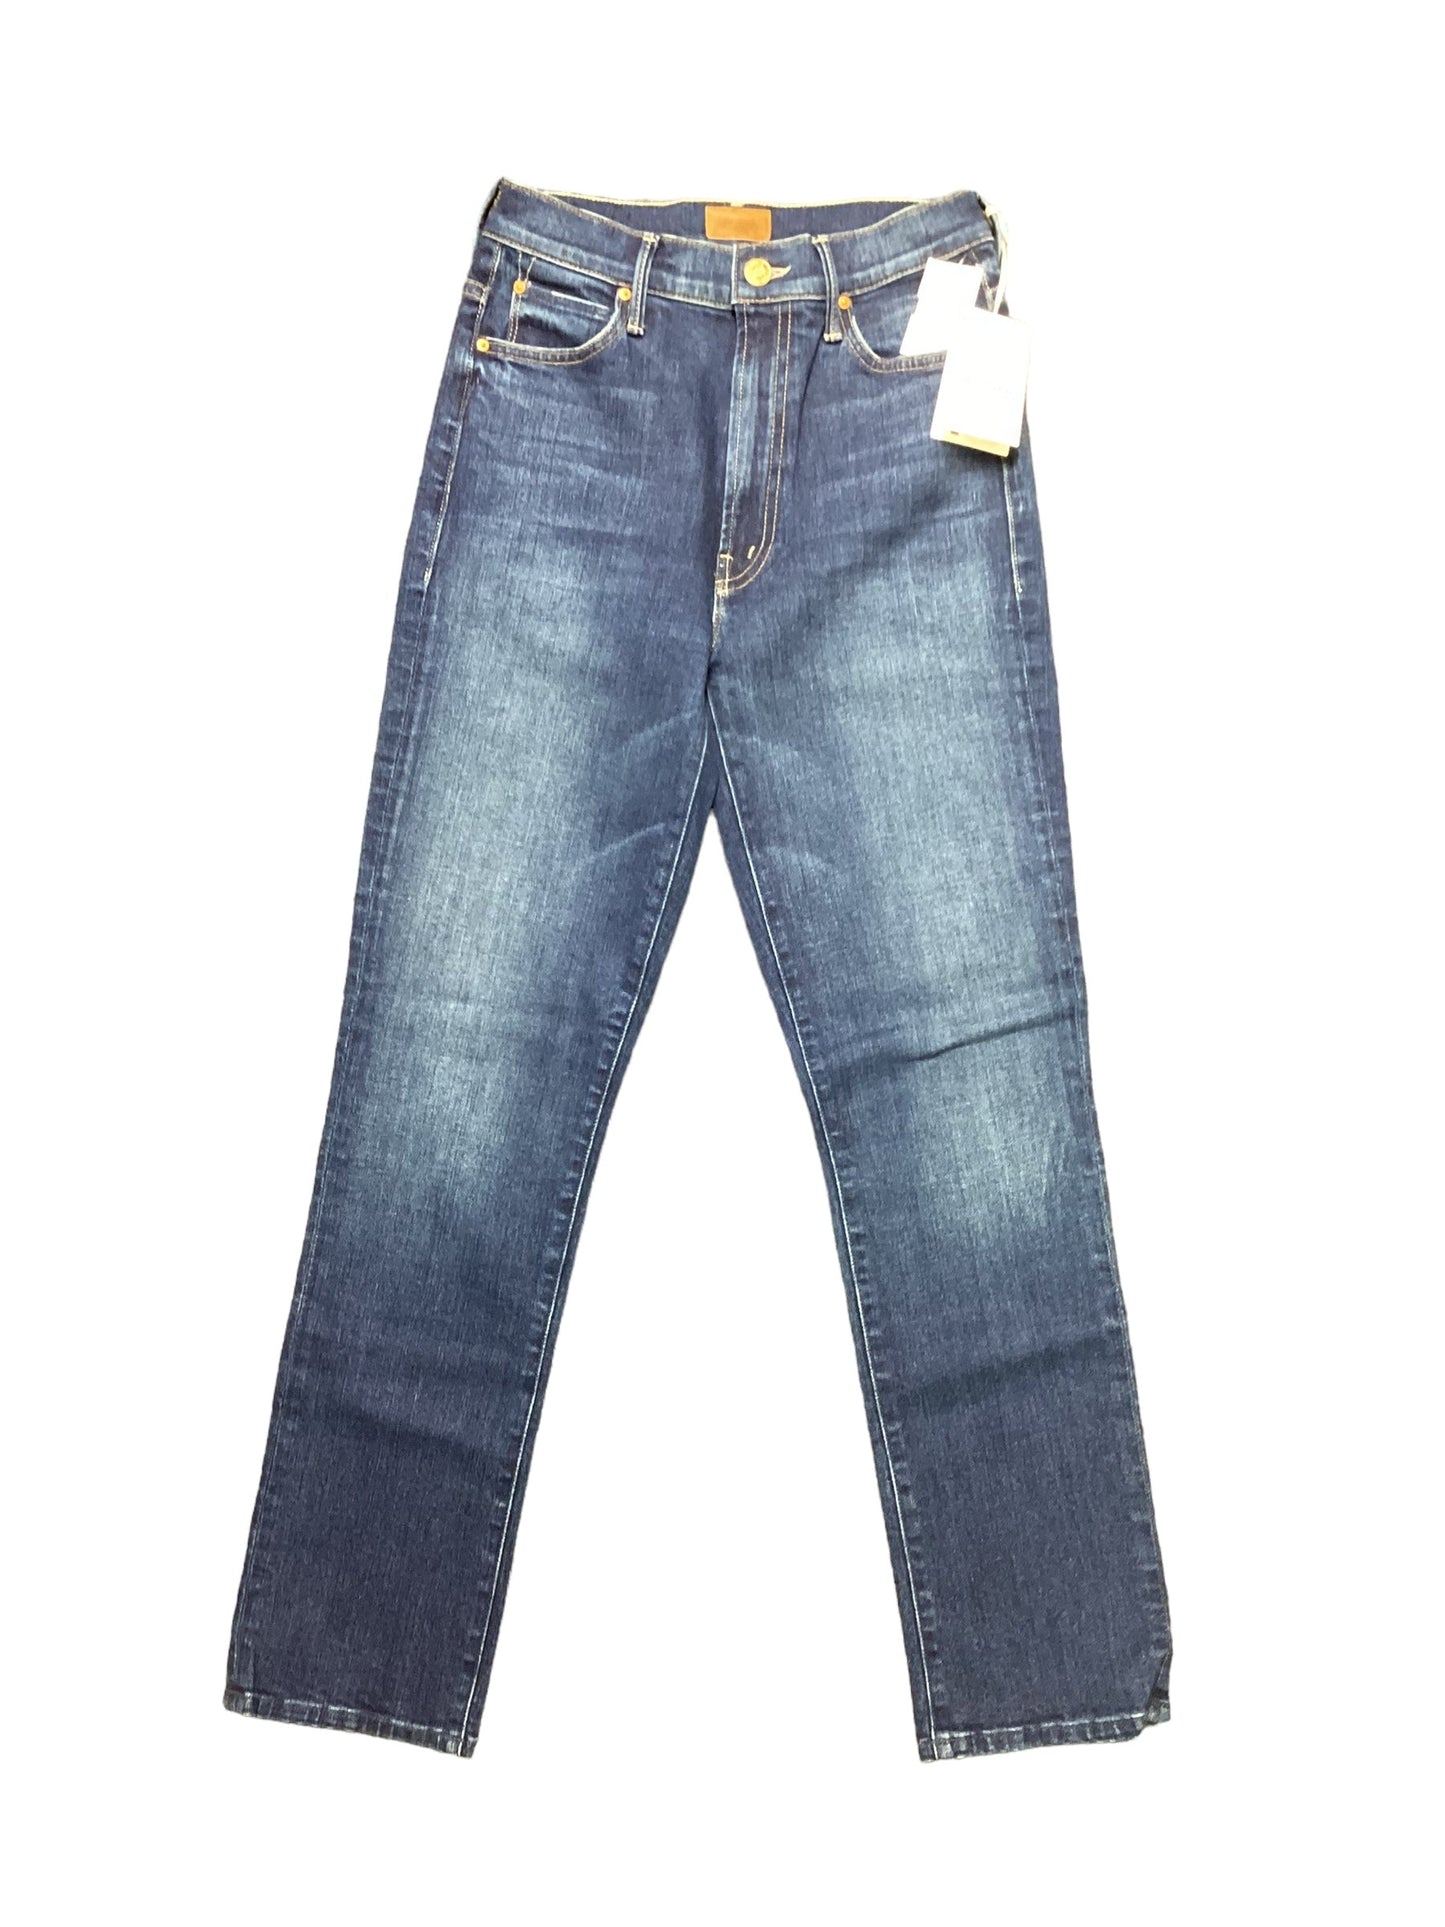 Blue Denim Jeans Straight Mother Jeans, Size 0